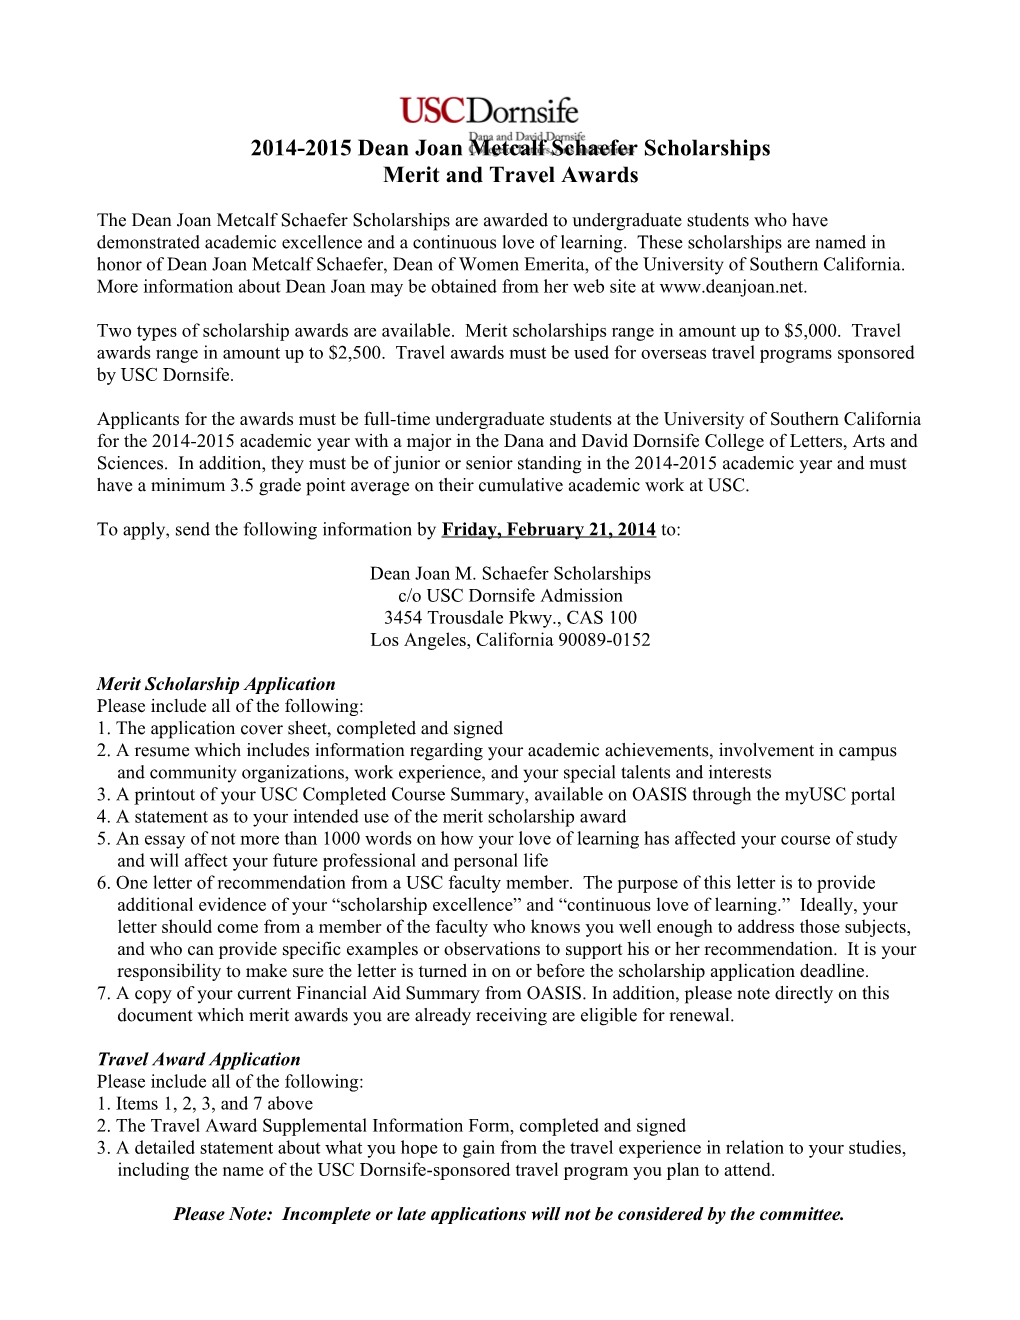 2014-2015 Dean Joan Metcalf Schaefer Scholarships Merit and Travel Awards